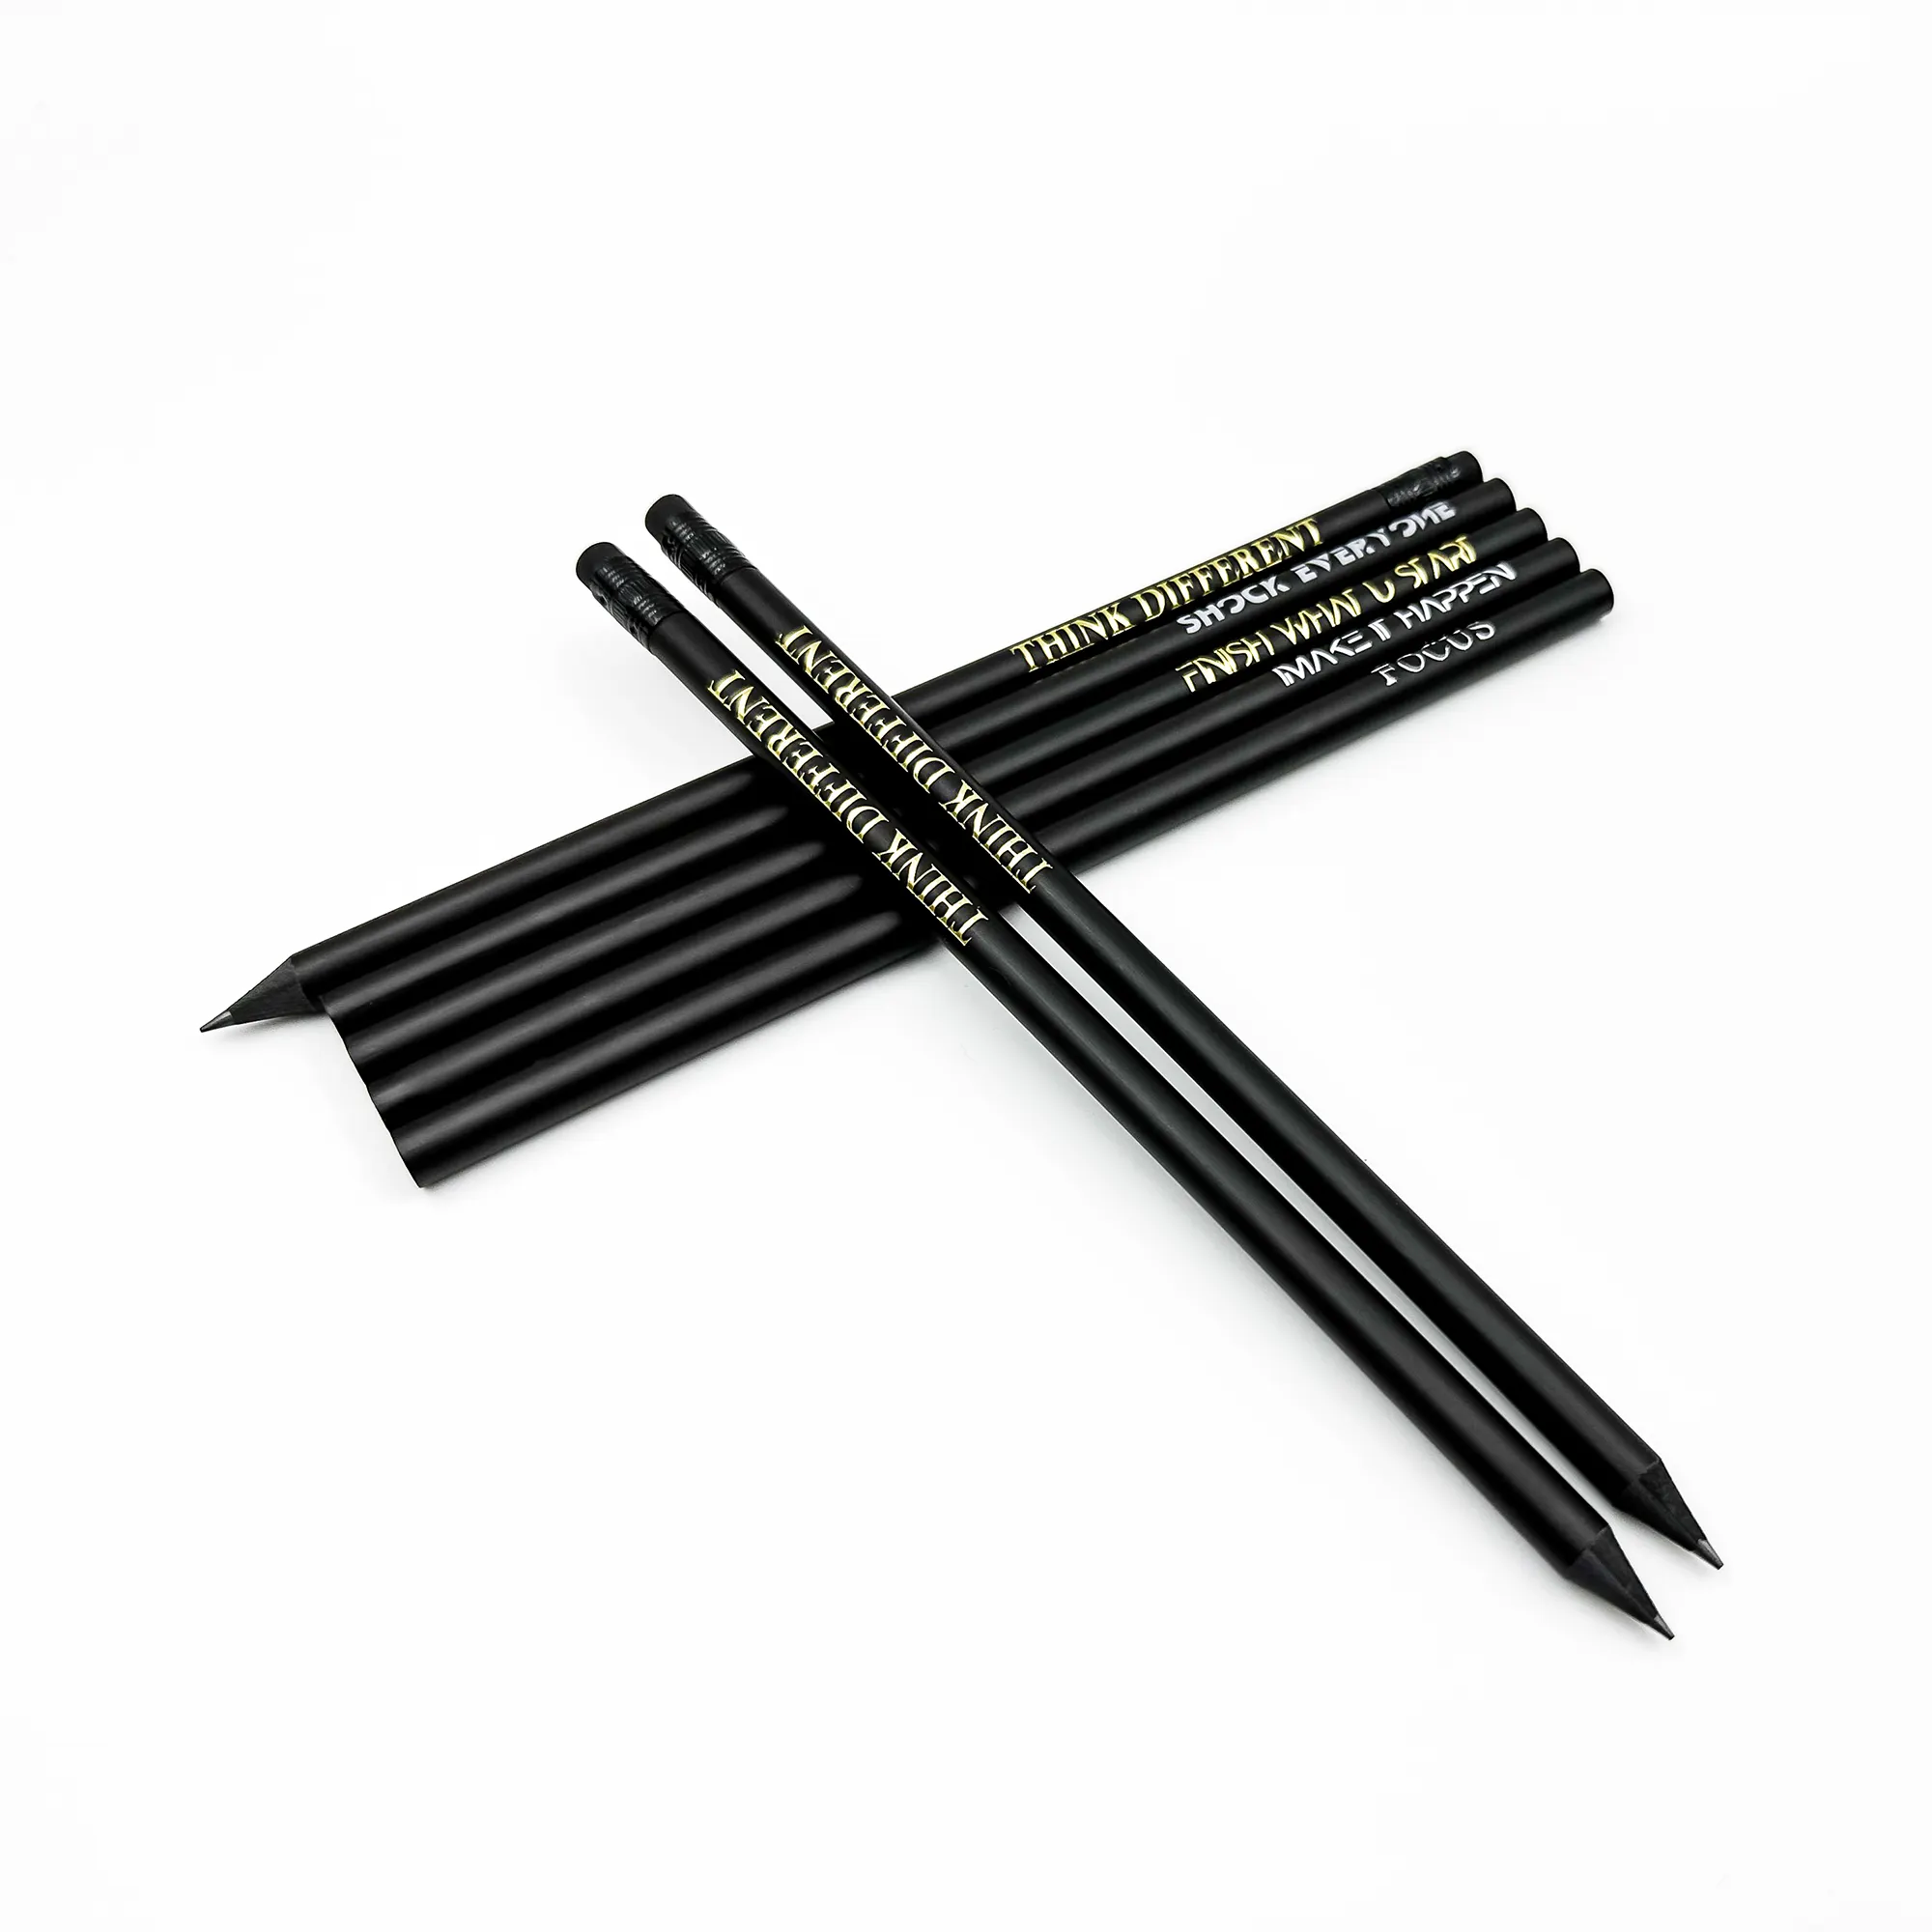 Premium Pre-sharpened Custom HB Lead graphite 7-inch Black Wood Pencil personalized pencils with eraser tip